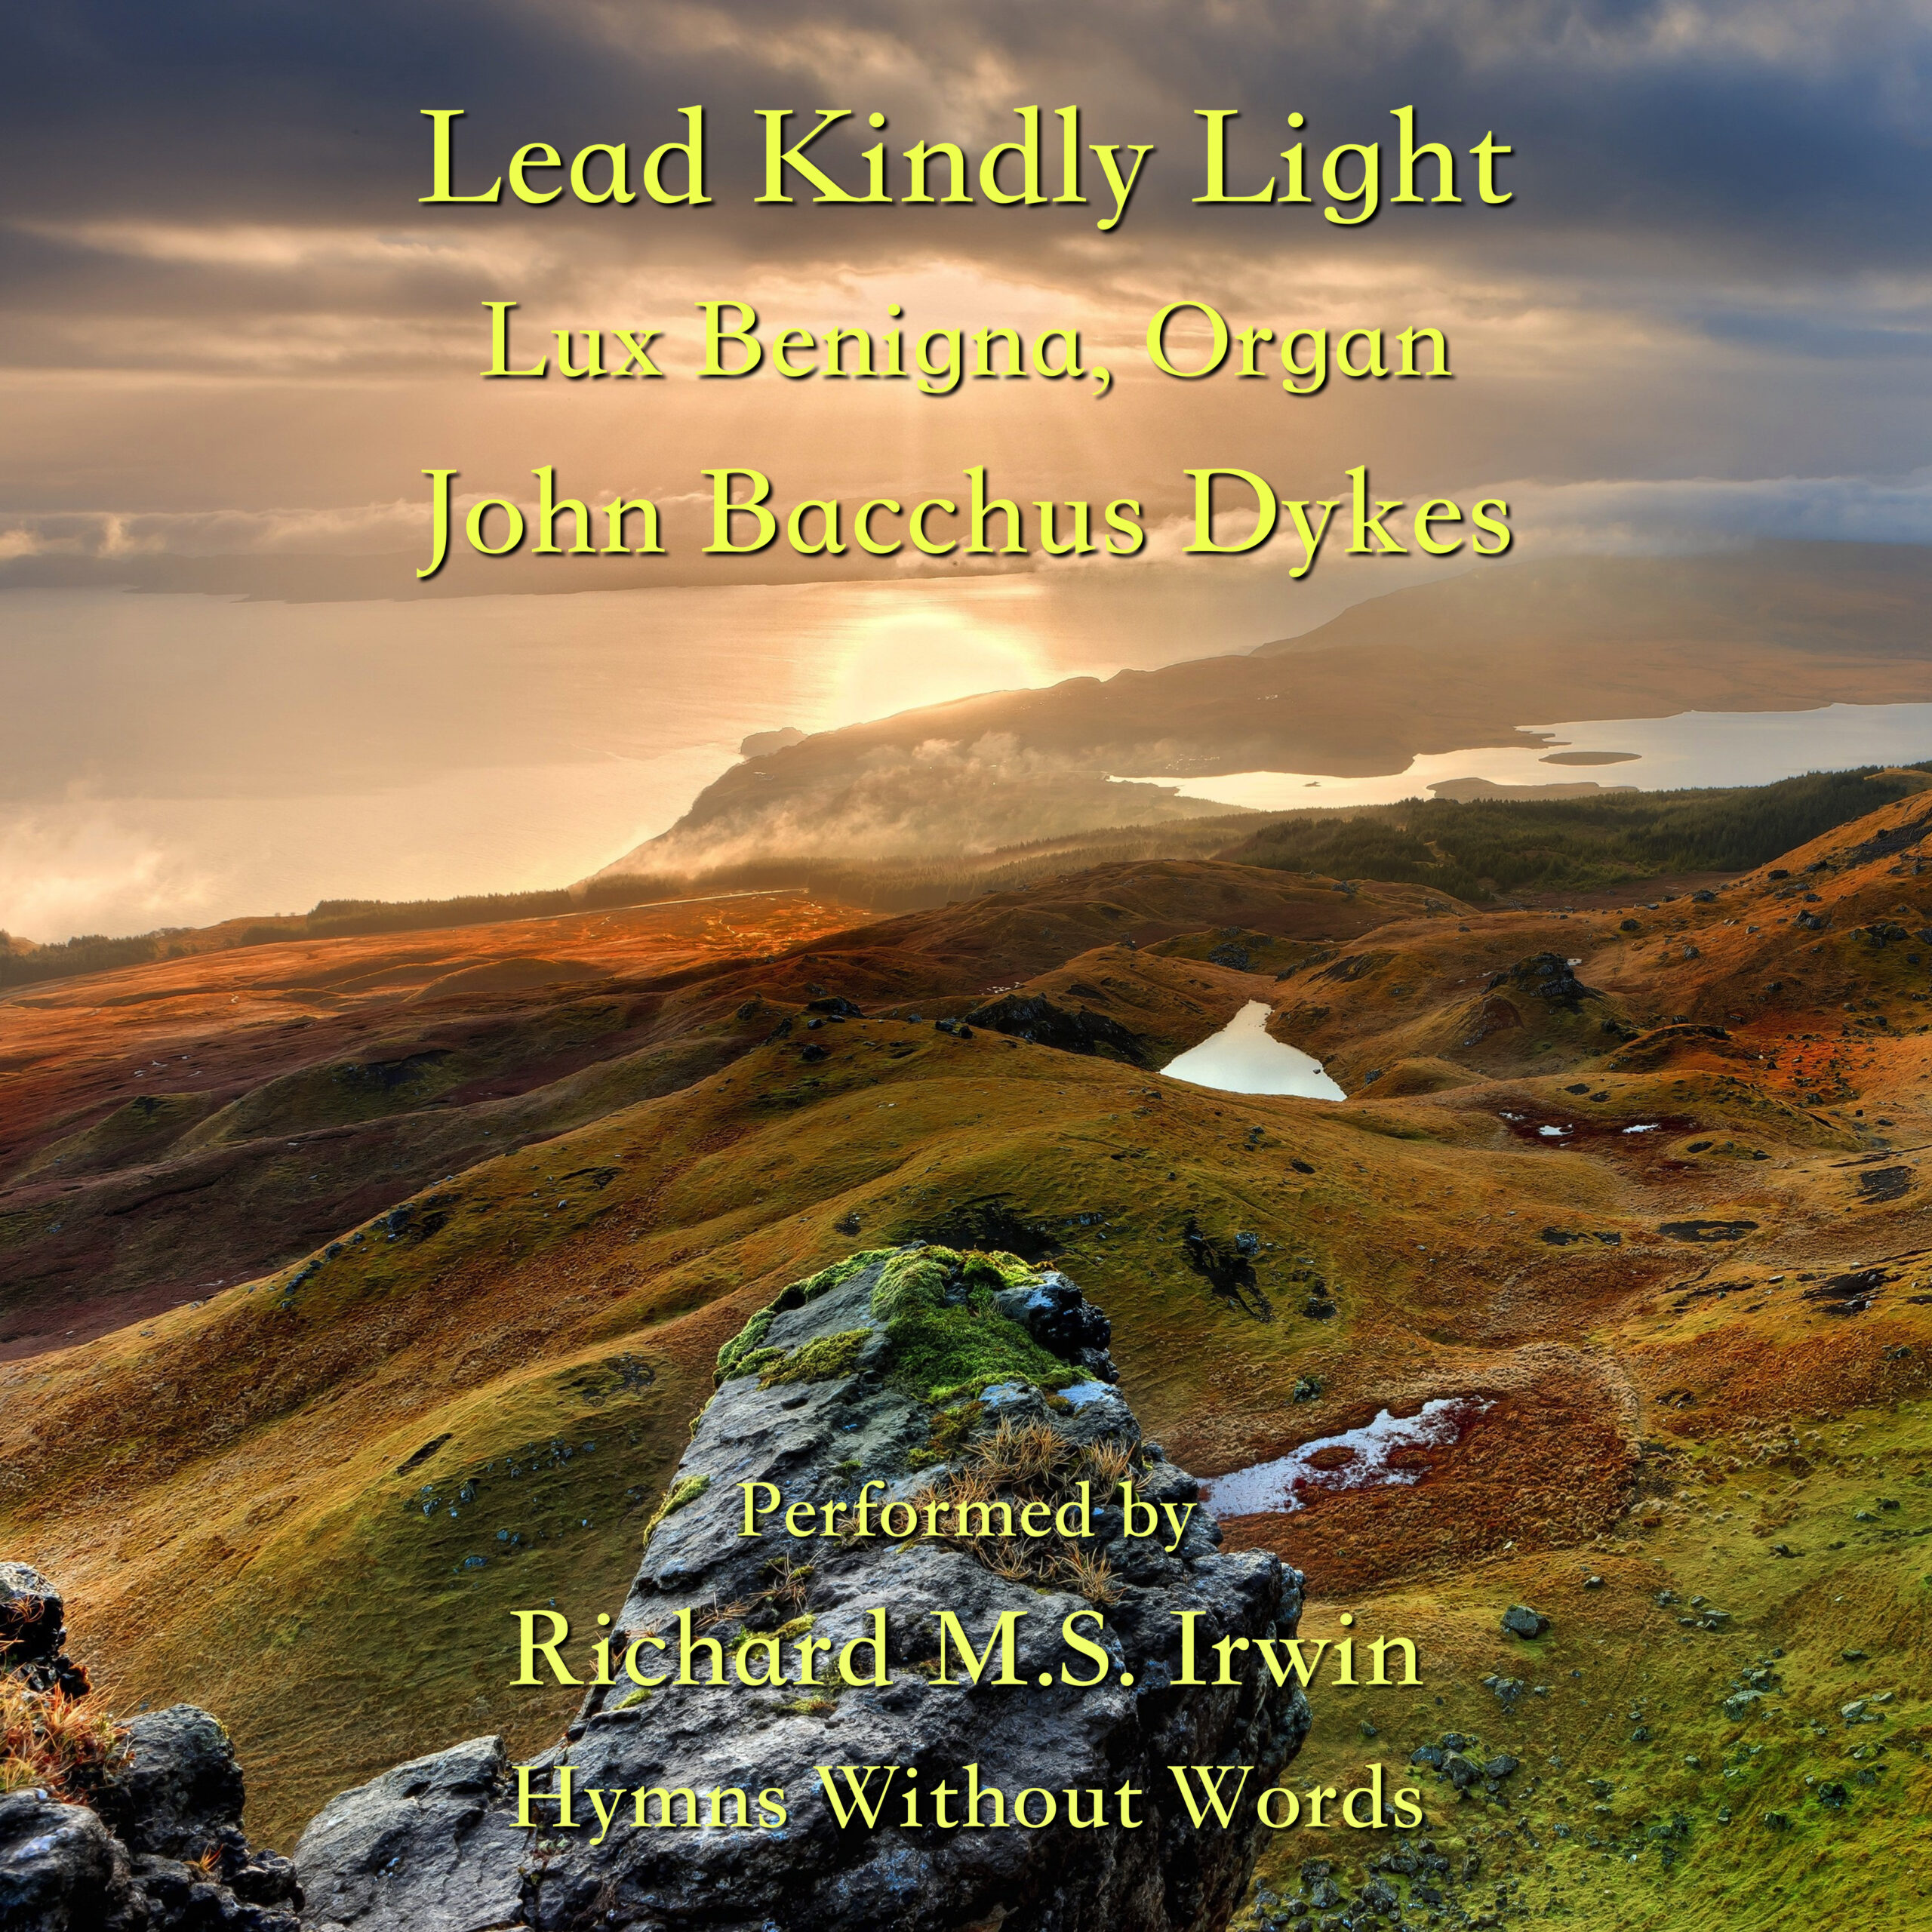 Lead Kindly Light (Lux Benigna, Organ, 4 Verses)